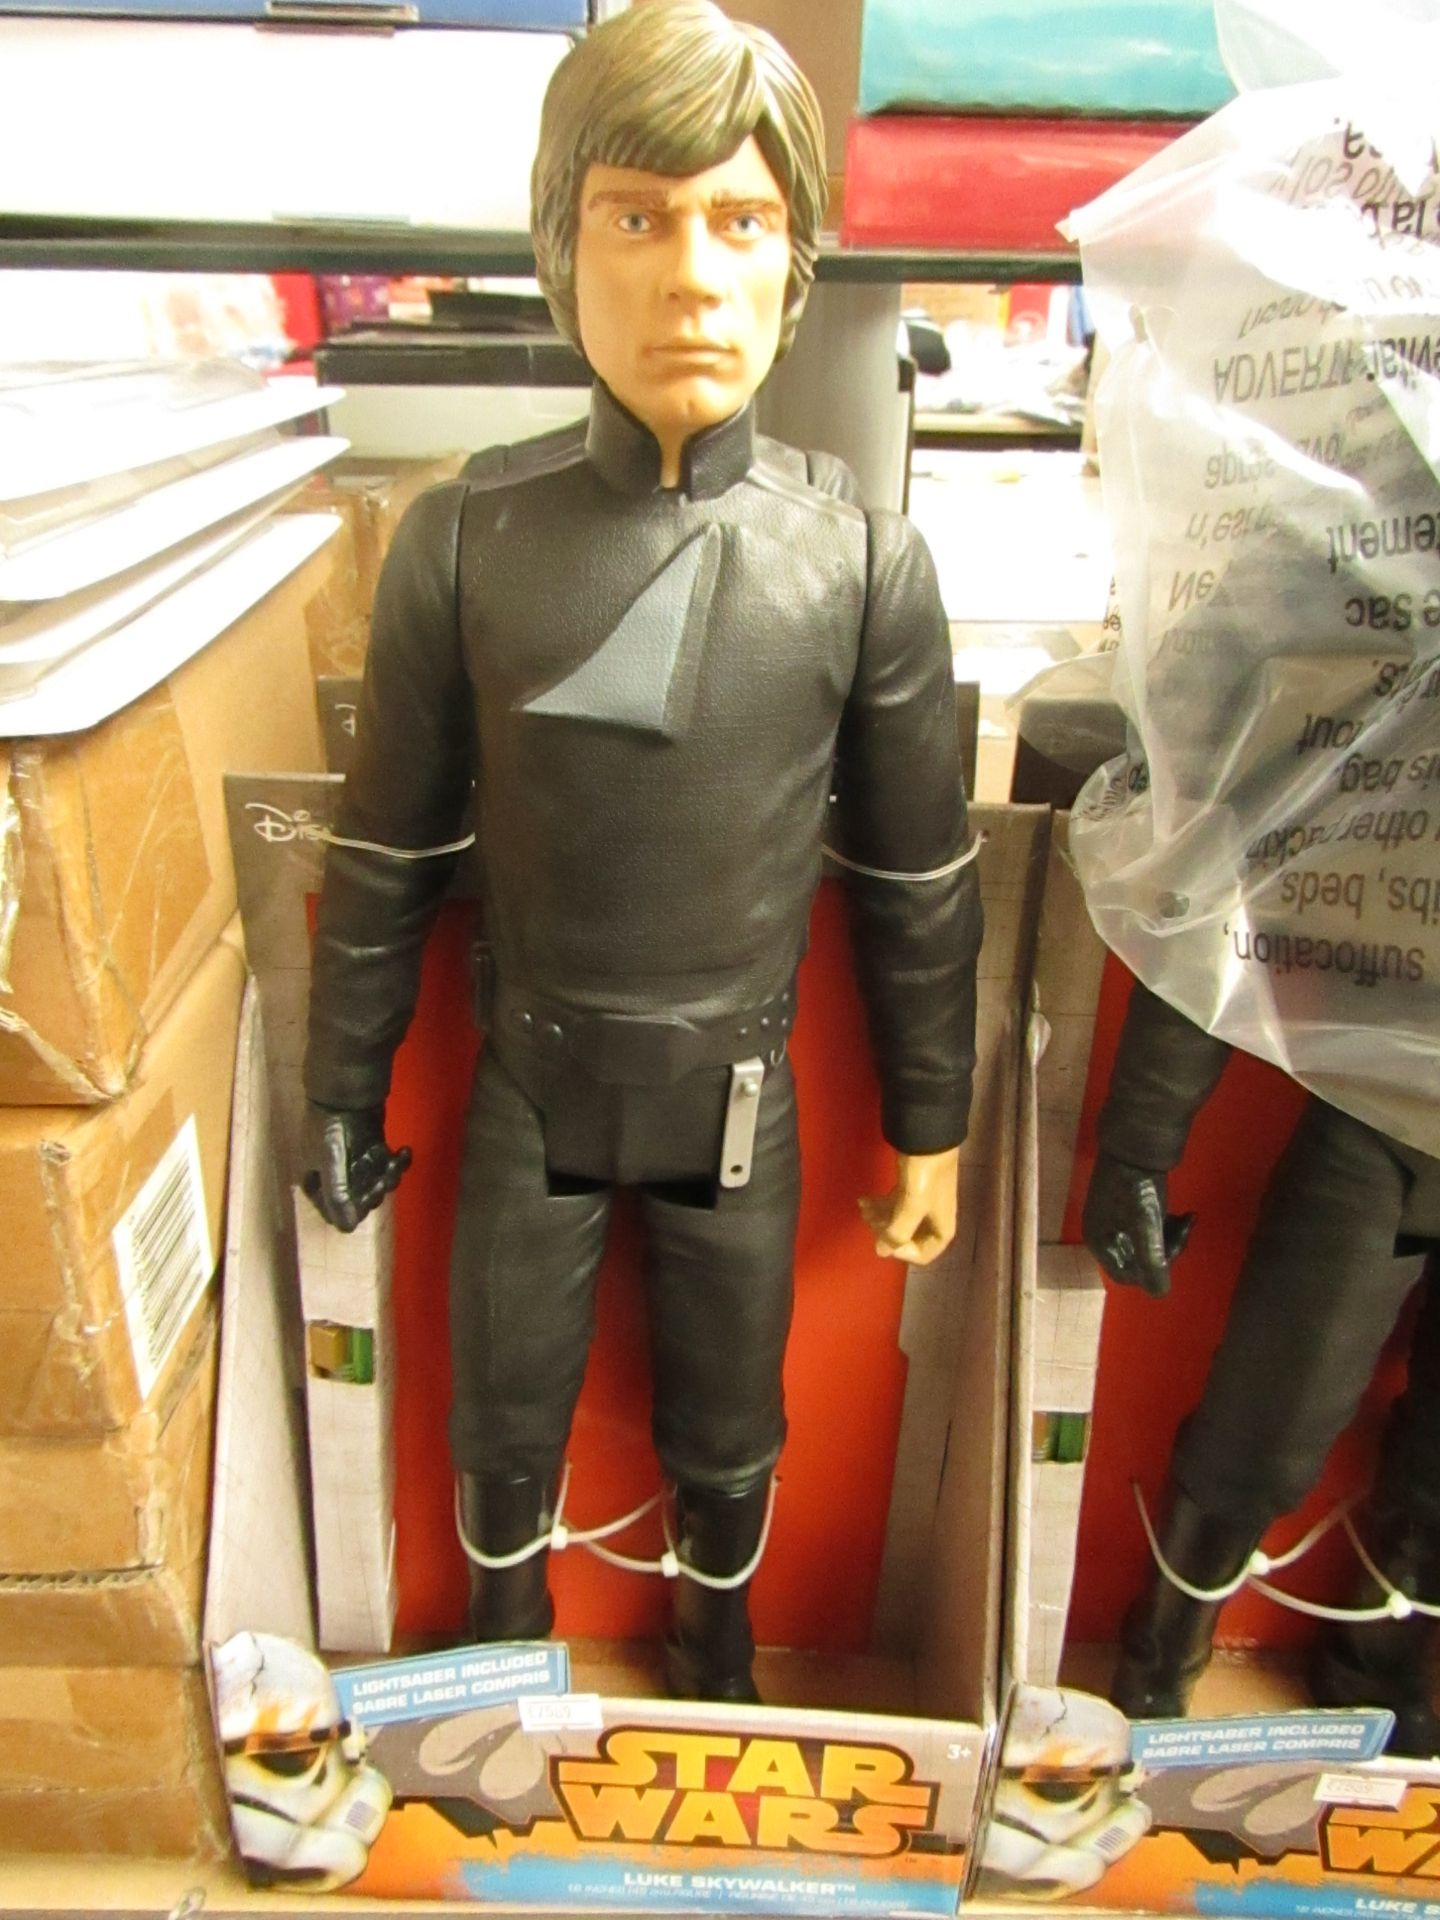 Star Wars Luke Skywalker figure, new and packaged.